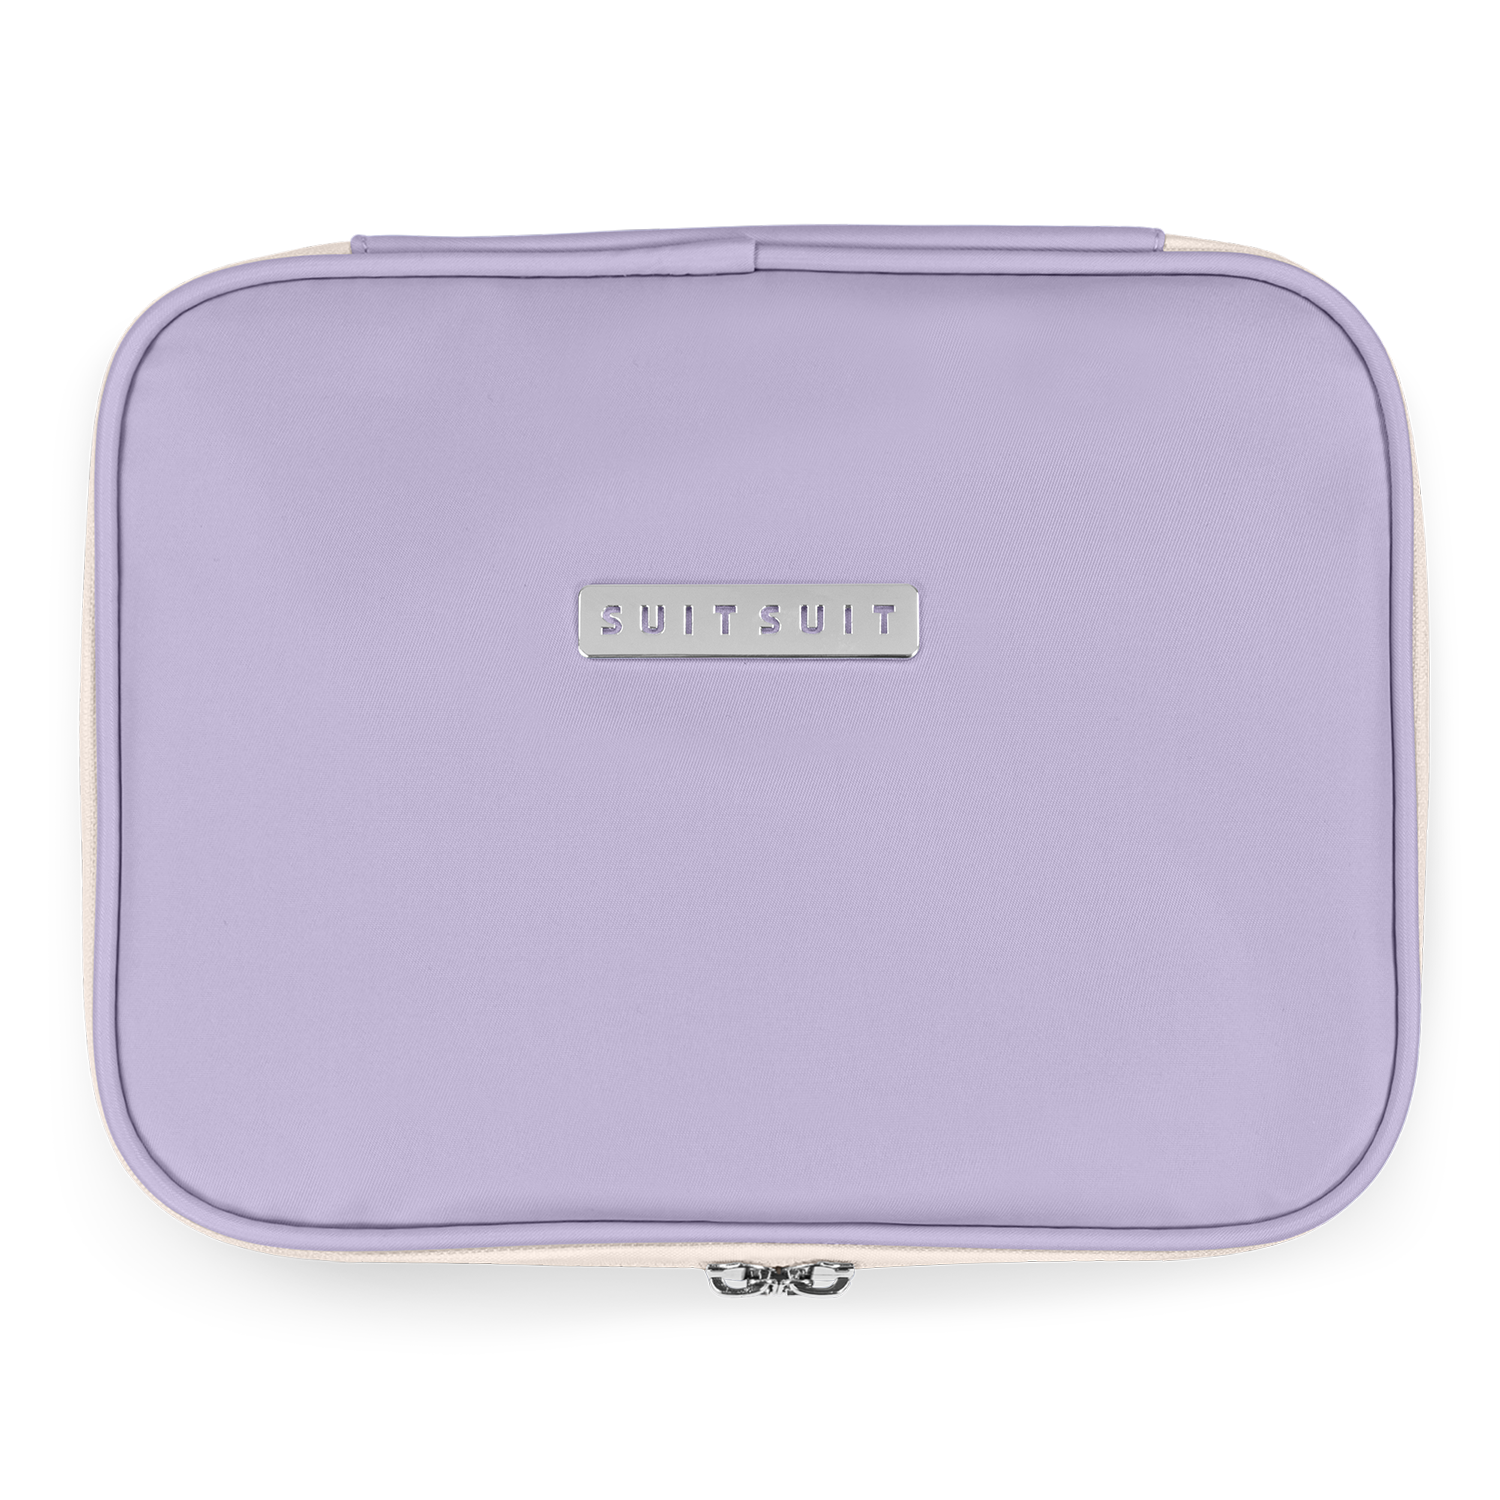 Fabulous Fifties - Royal Lavender - Packing Cube Set (76 cm)